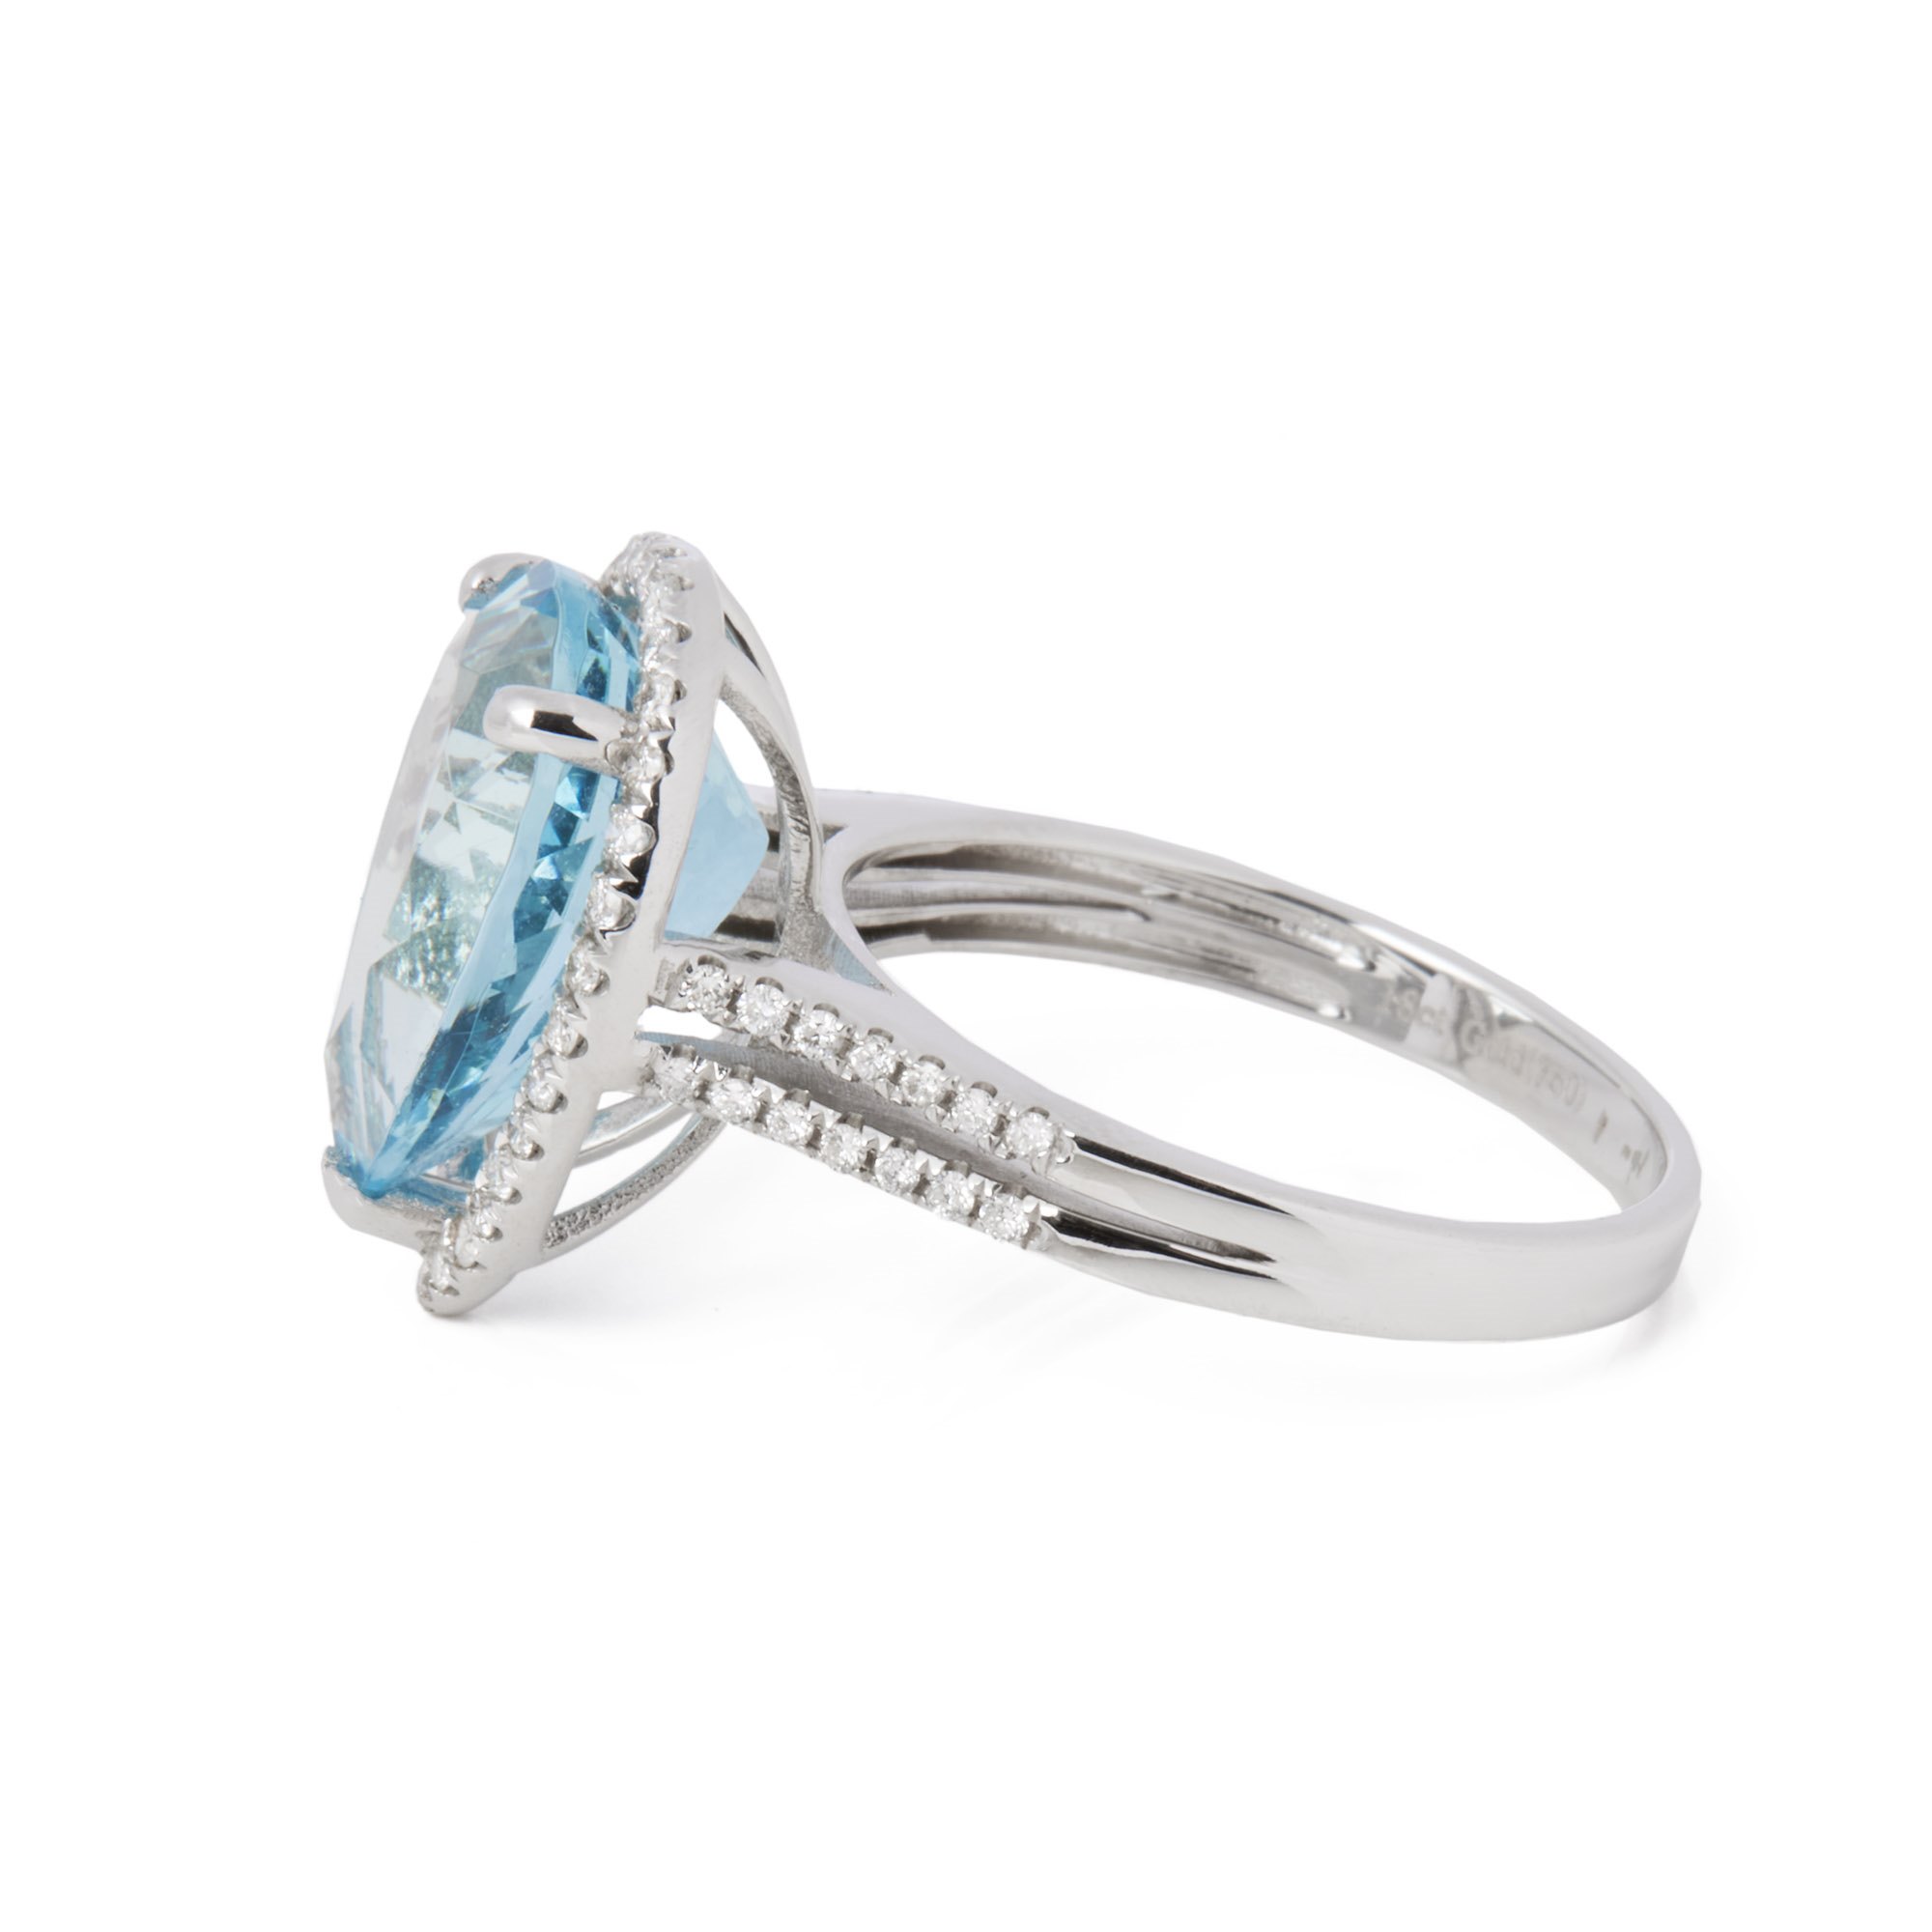 David Jerome Certified 4.77ct Pear Cut Aquamarine and Diamond Ring